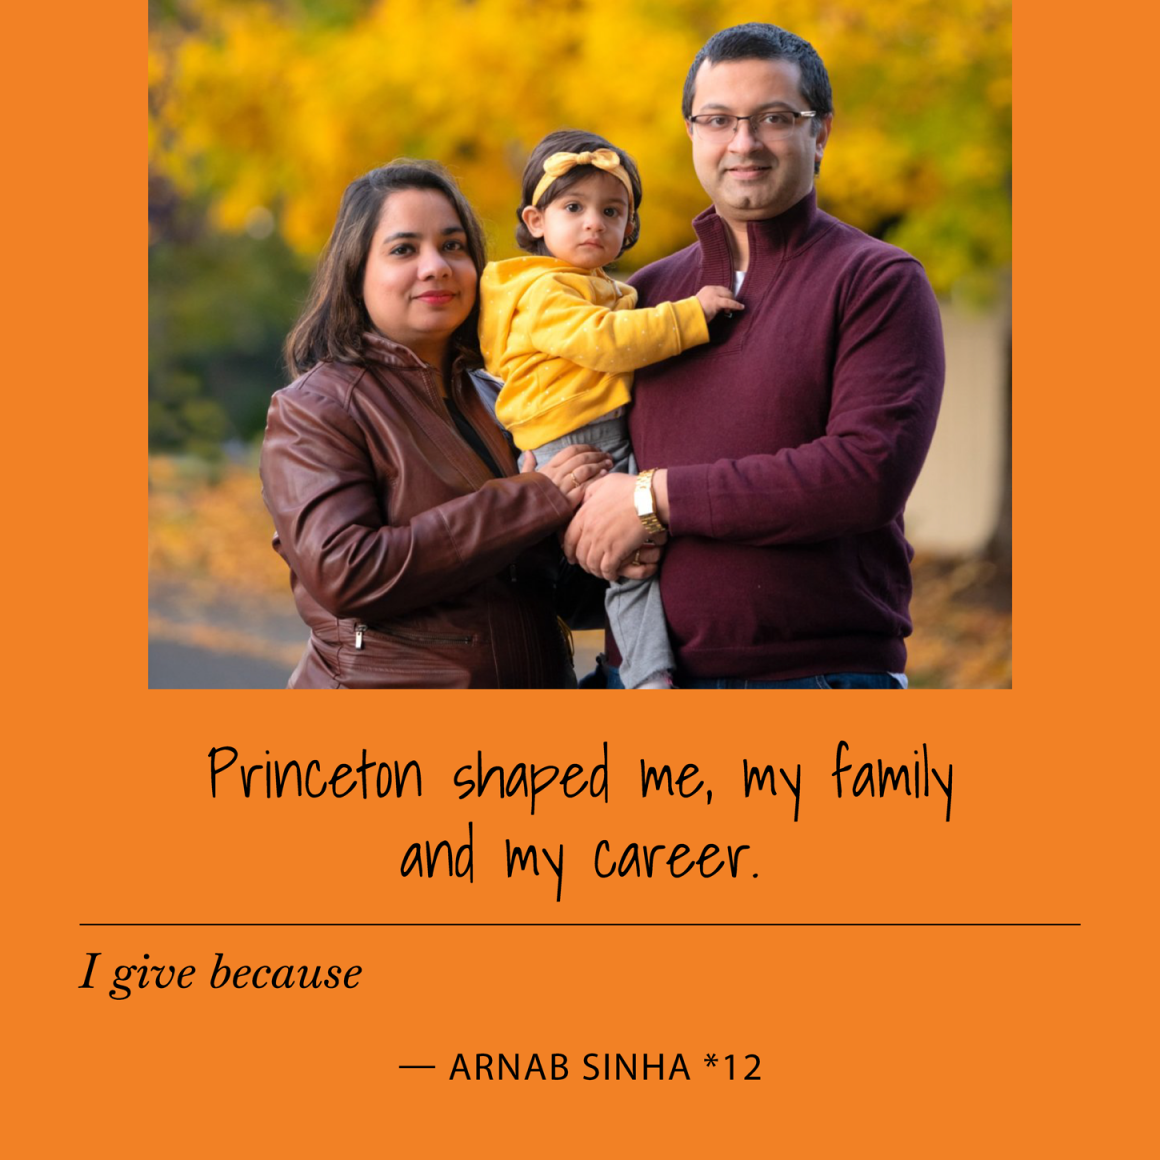 I give to Princeton because Princeton shaped me, my family and my career. Arnab Sinha *12